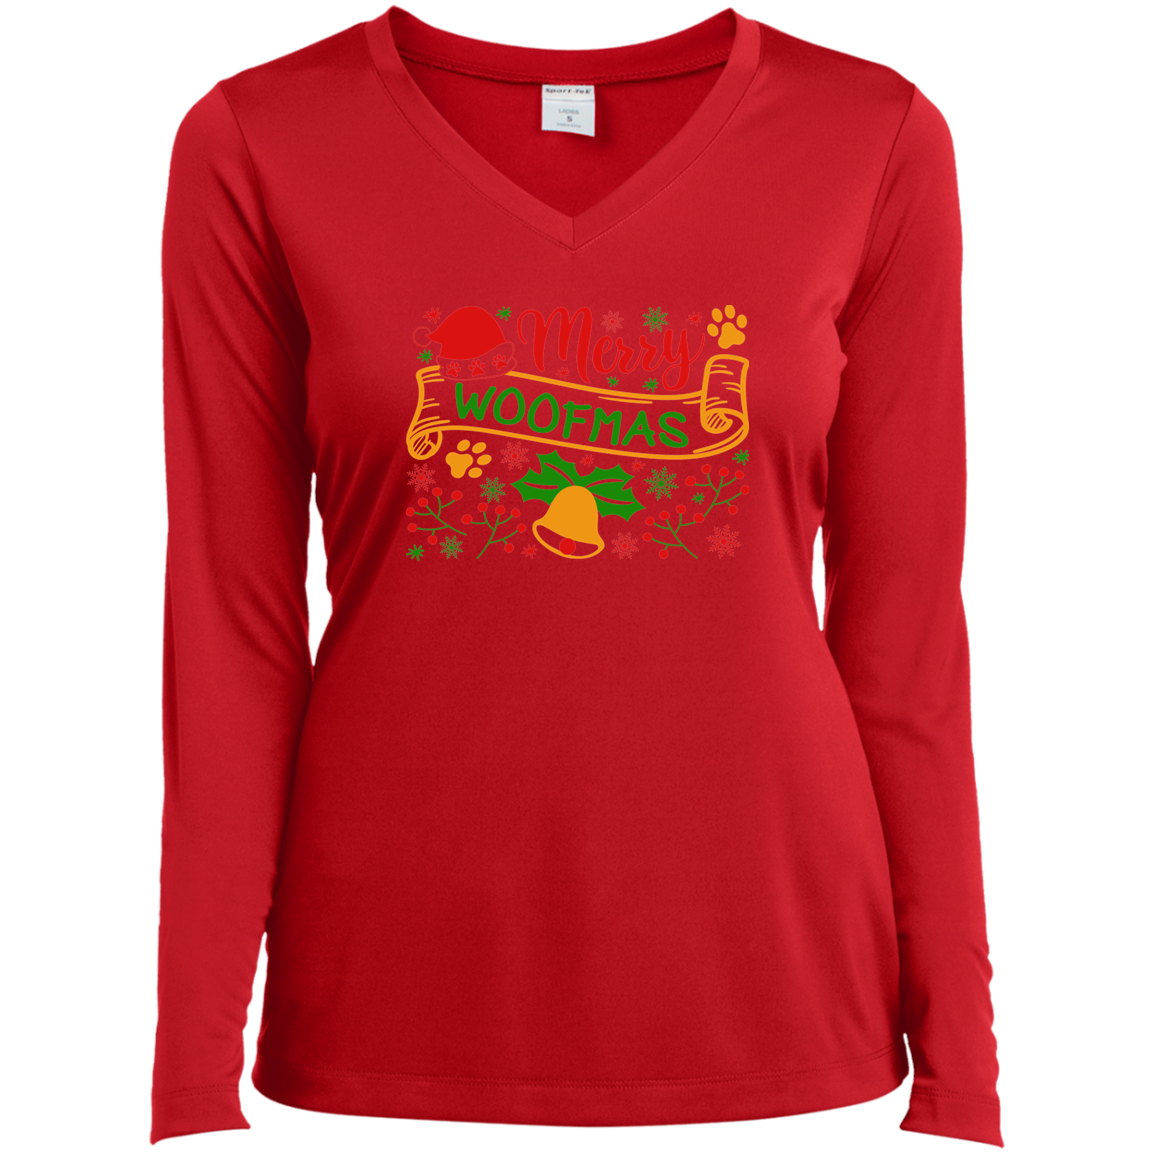 Merry Woofmas Dog Christmas Ladies’ Long Sleeve Performance V-Neck Tee